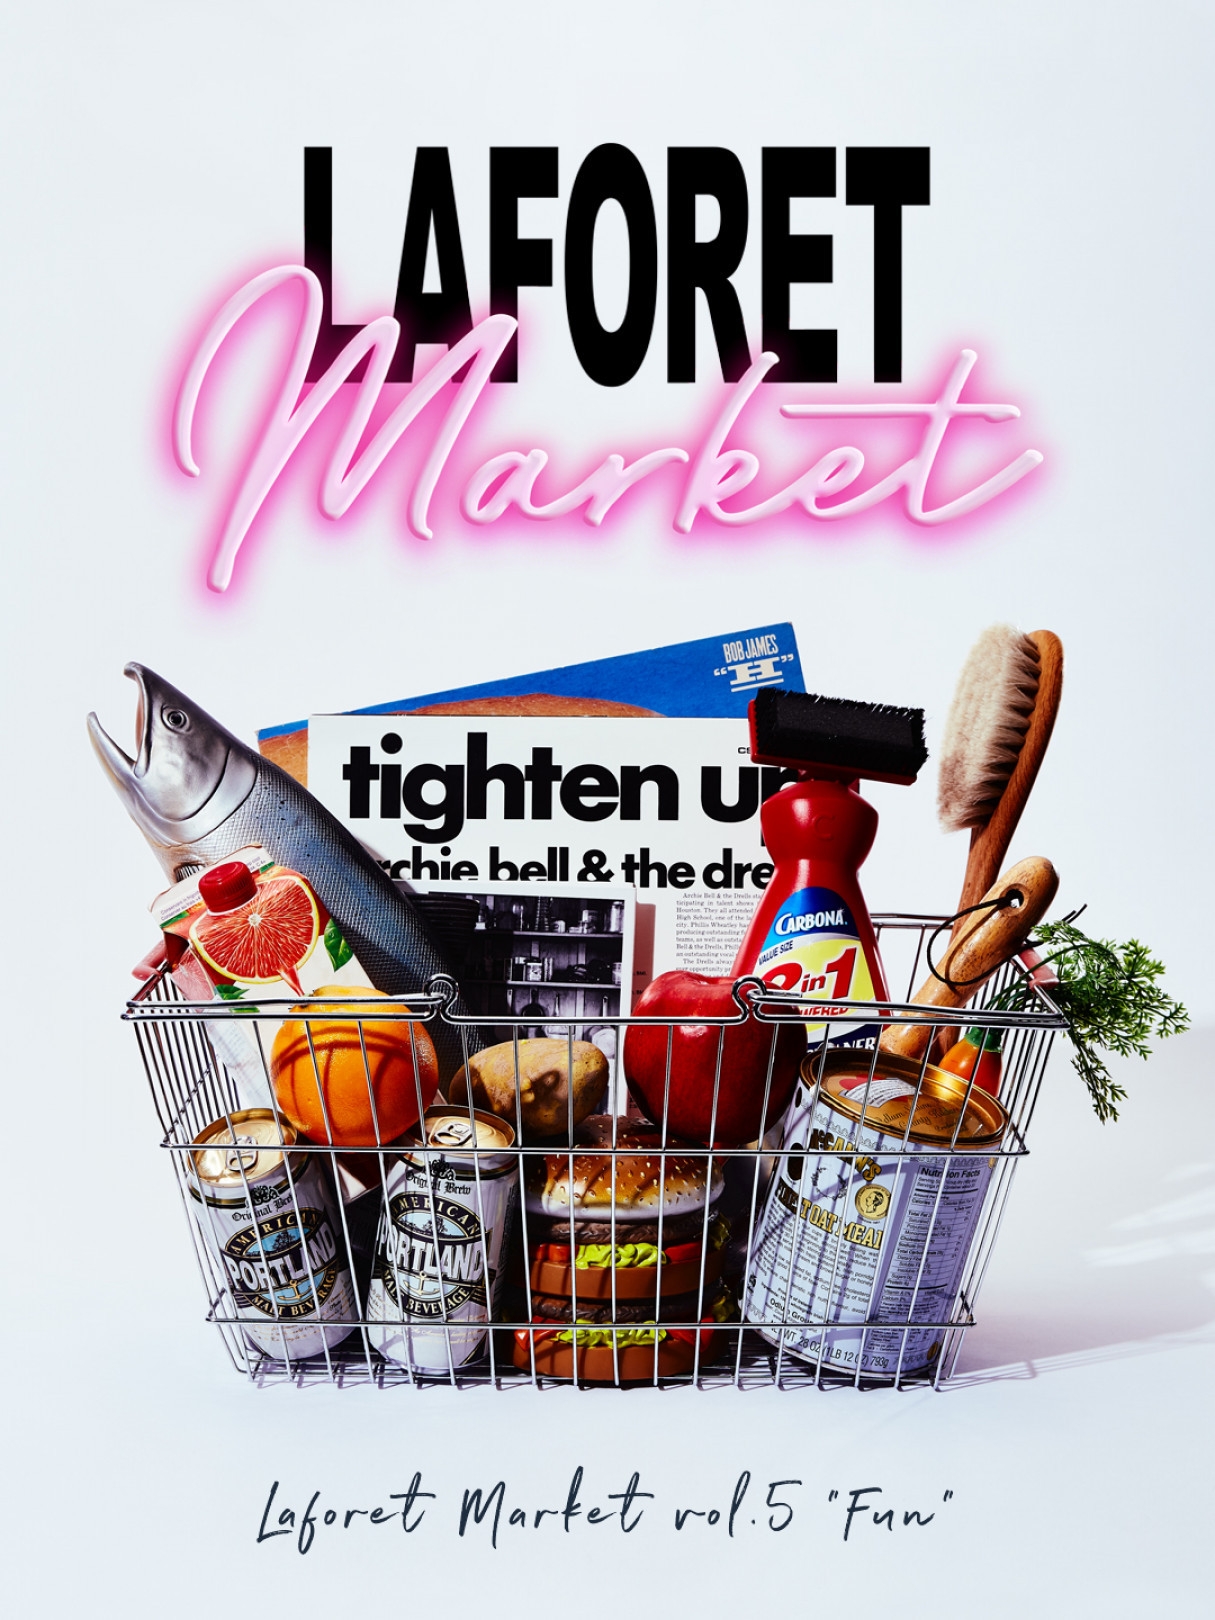 Laforet Market vol.5 “FUN”